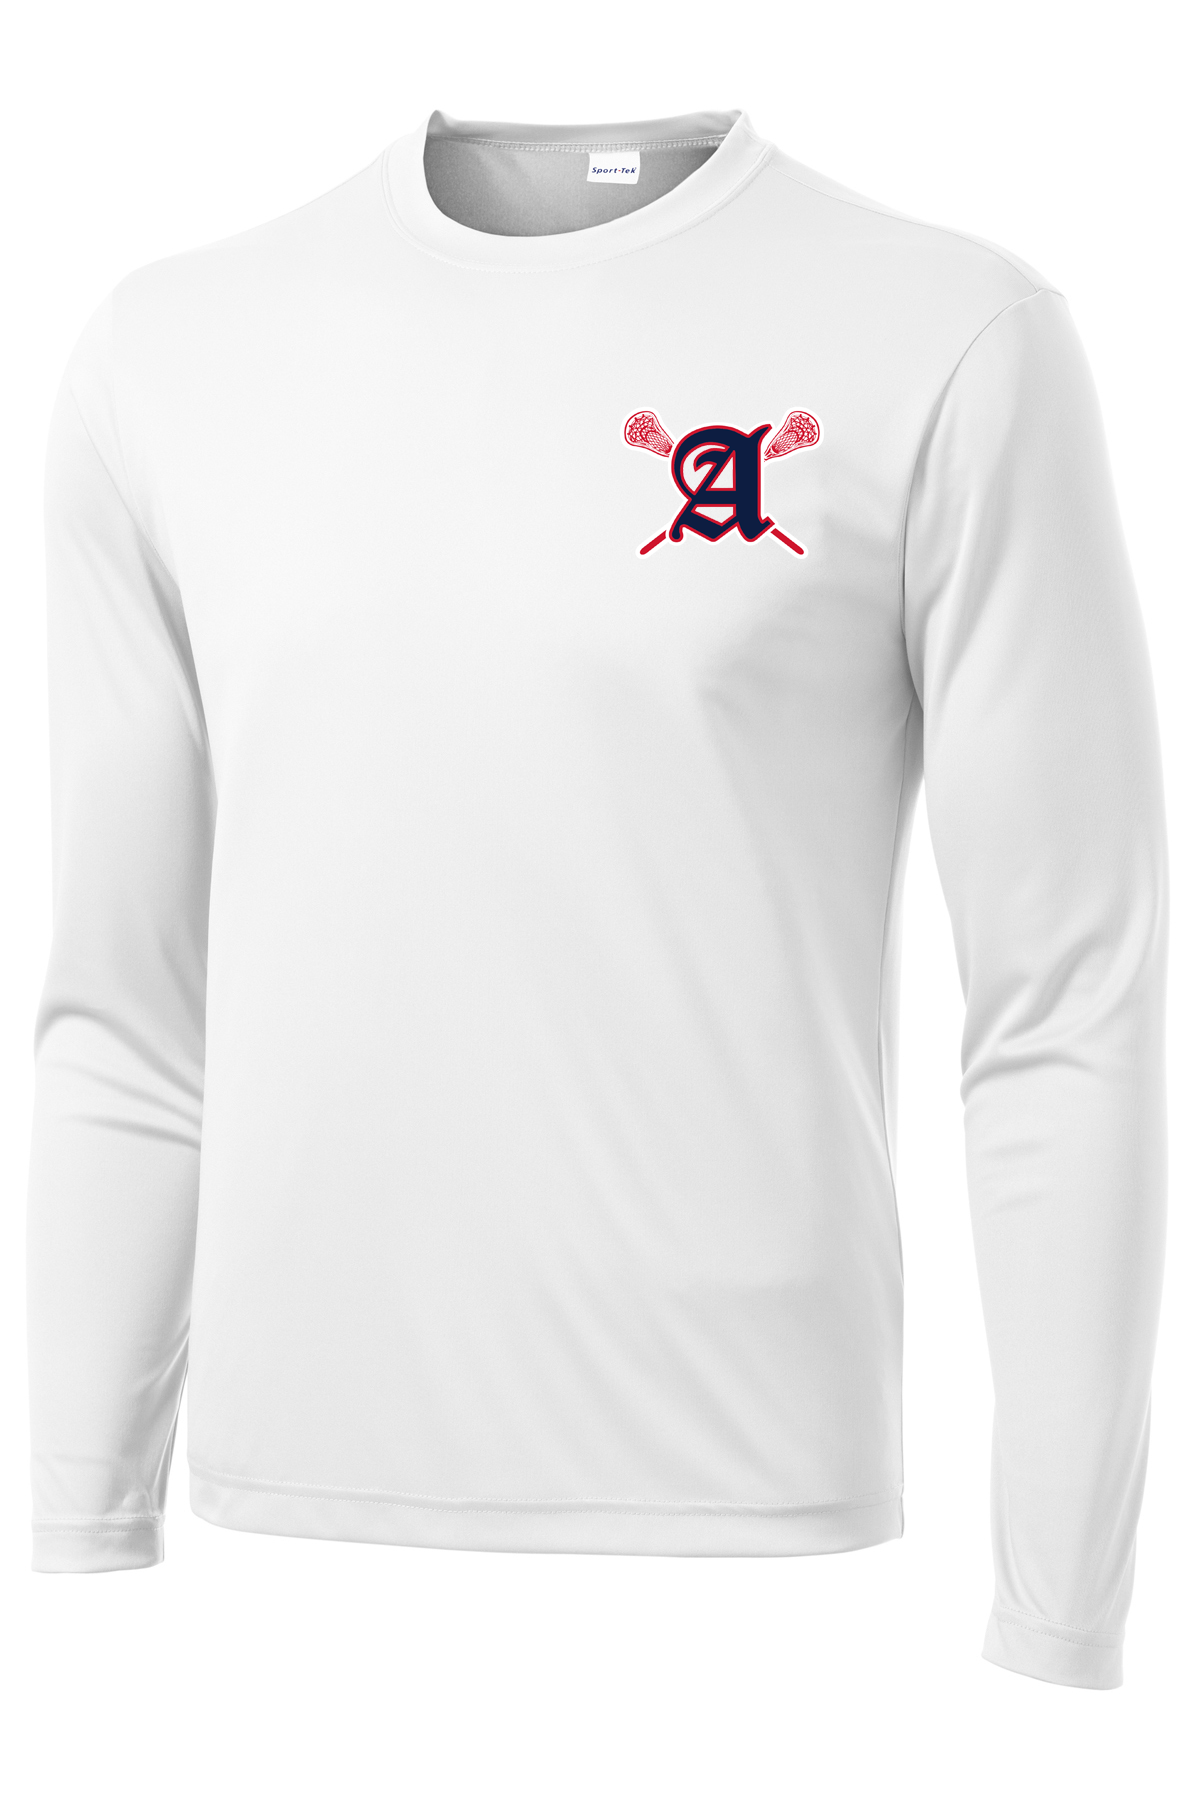 Augusta Patriots White Long Sleeve Performance Shirt